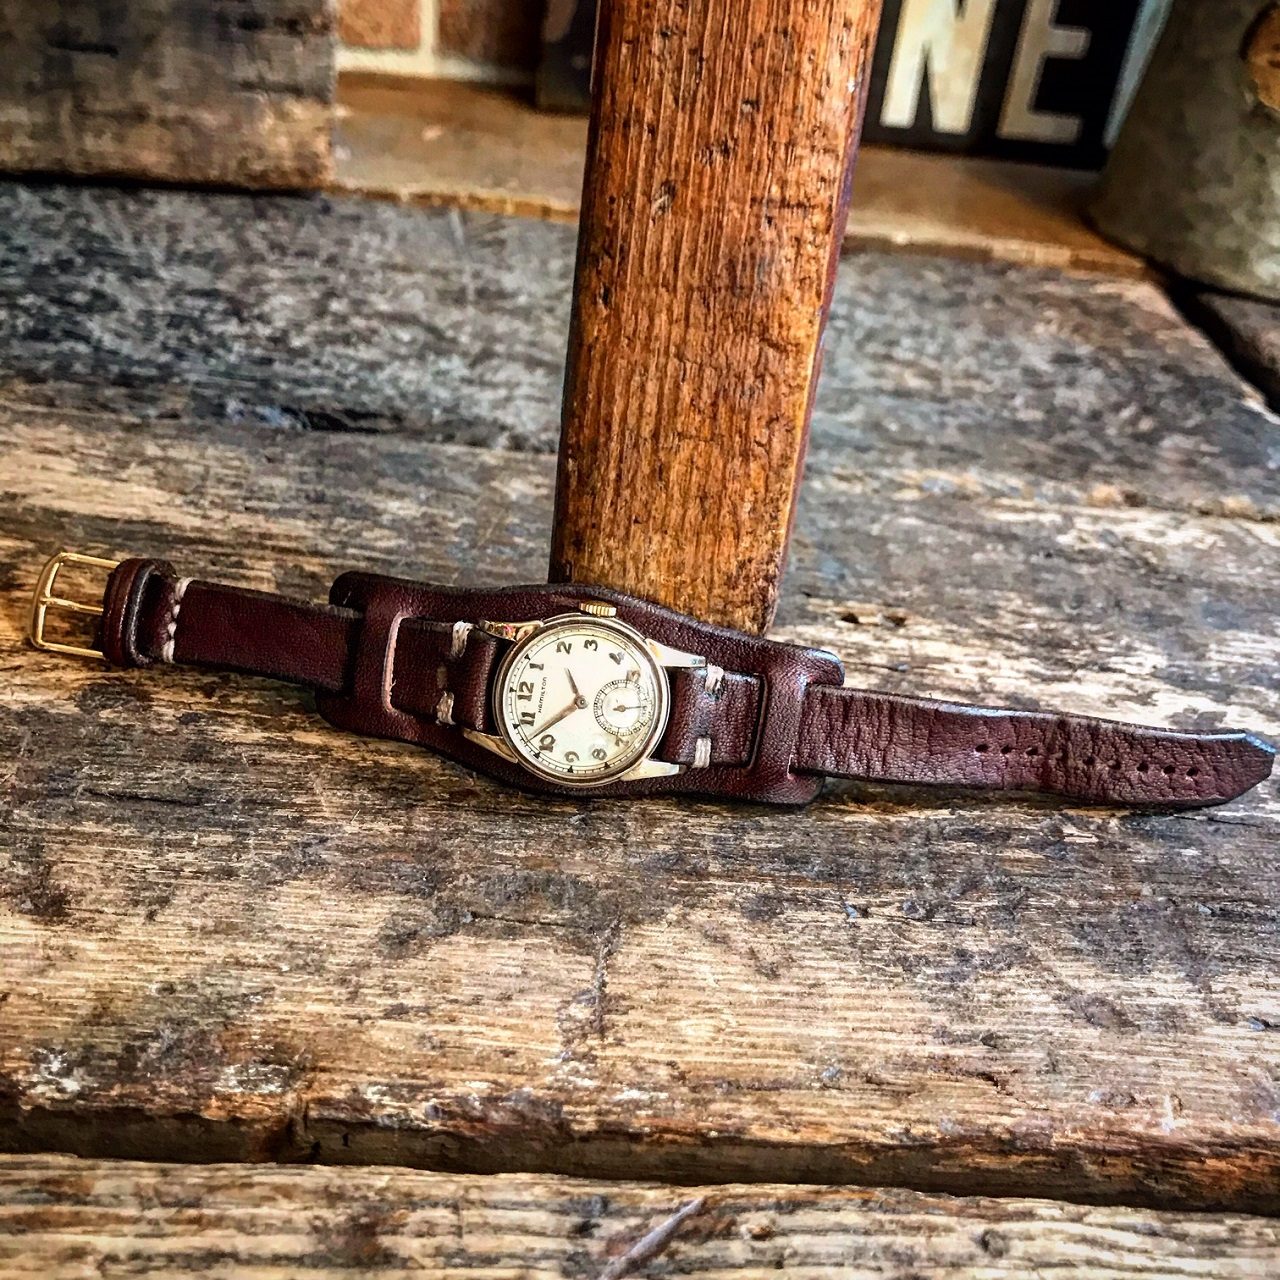 Dutch Leather Companyより、cover Watch beltが入荷致しました 